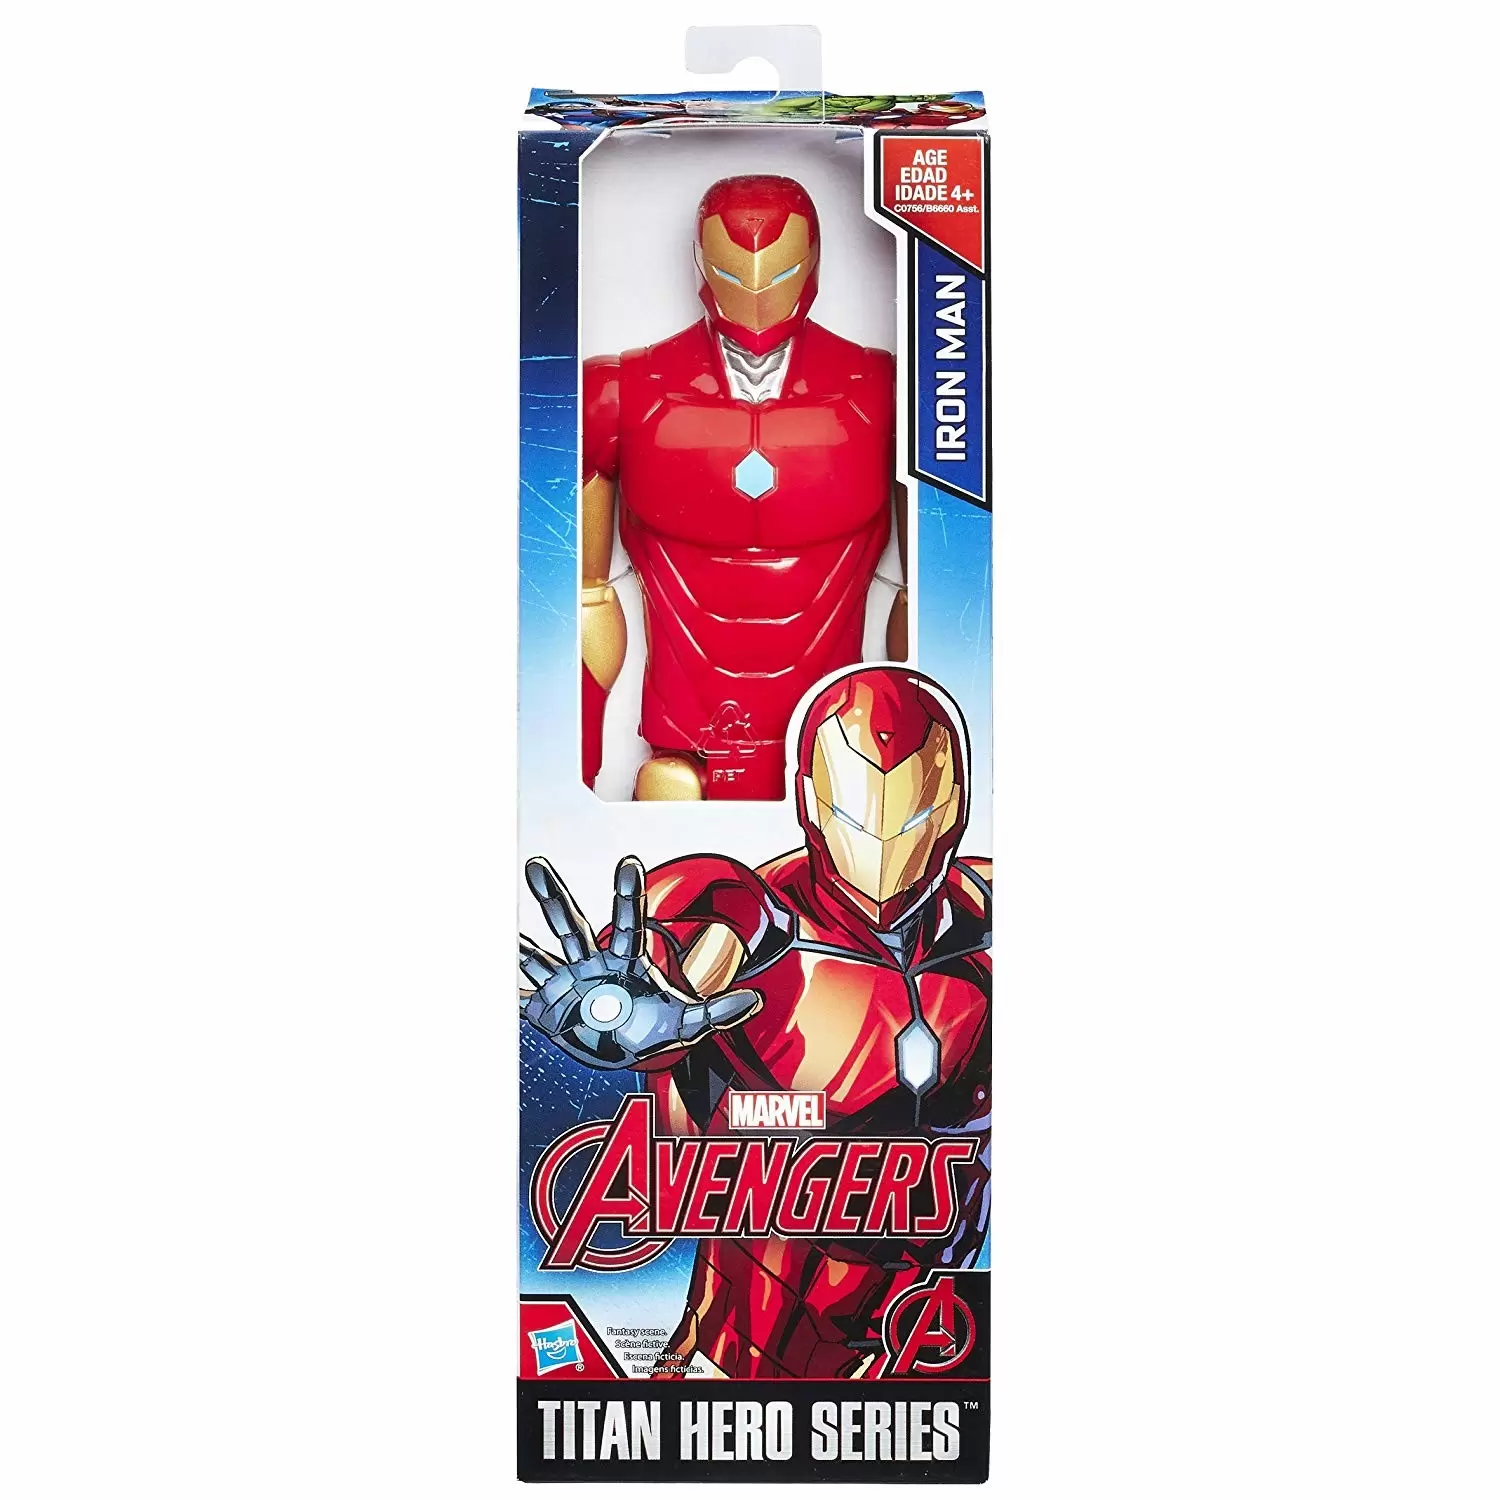 Titan Hero Series - Iron Man - Avengers